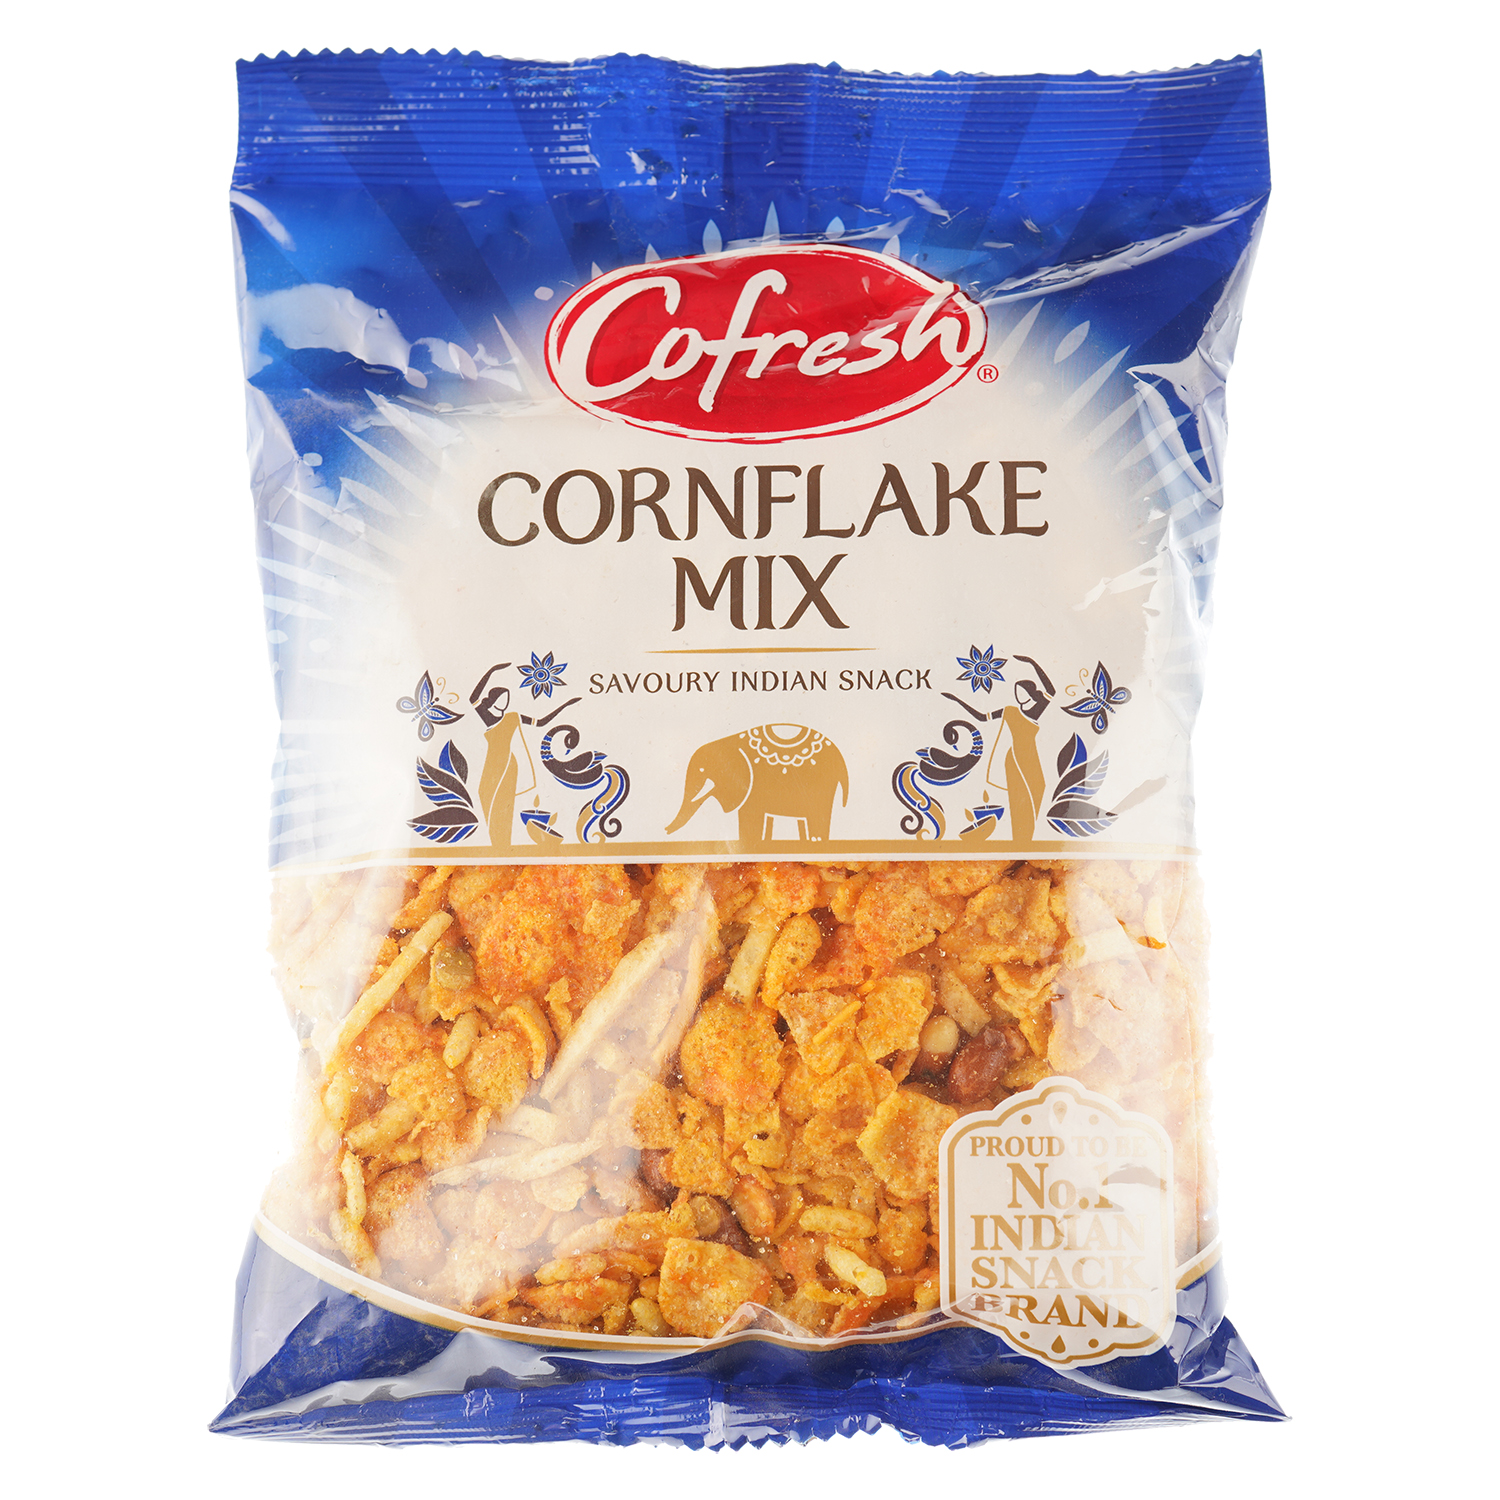 Снеки CoFresh Cornflake Mix кукурузные индийские 200 г - фото 1